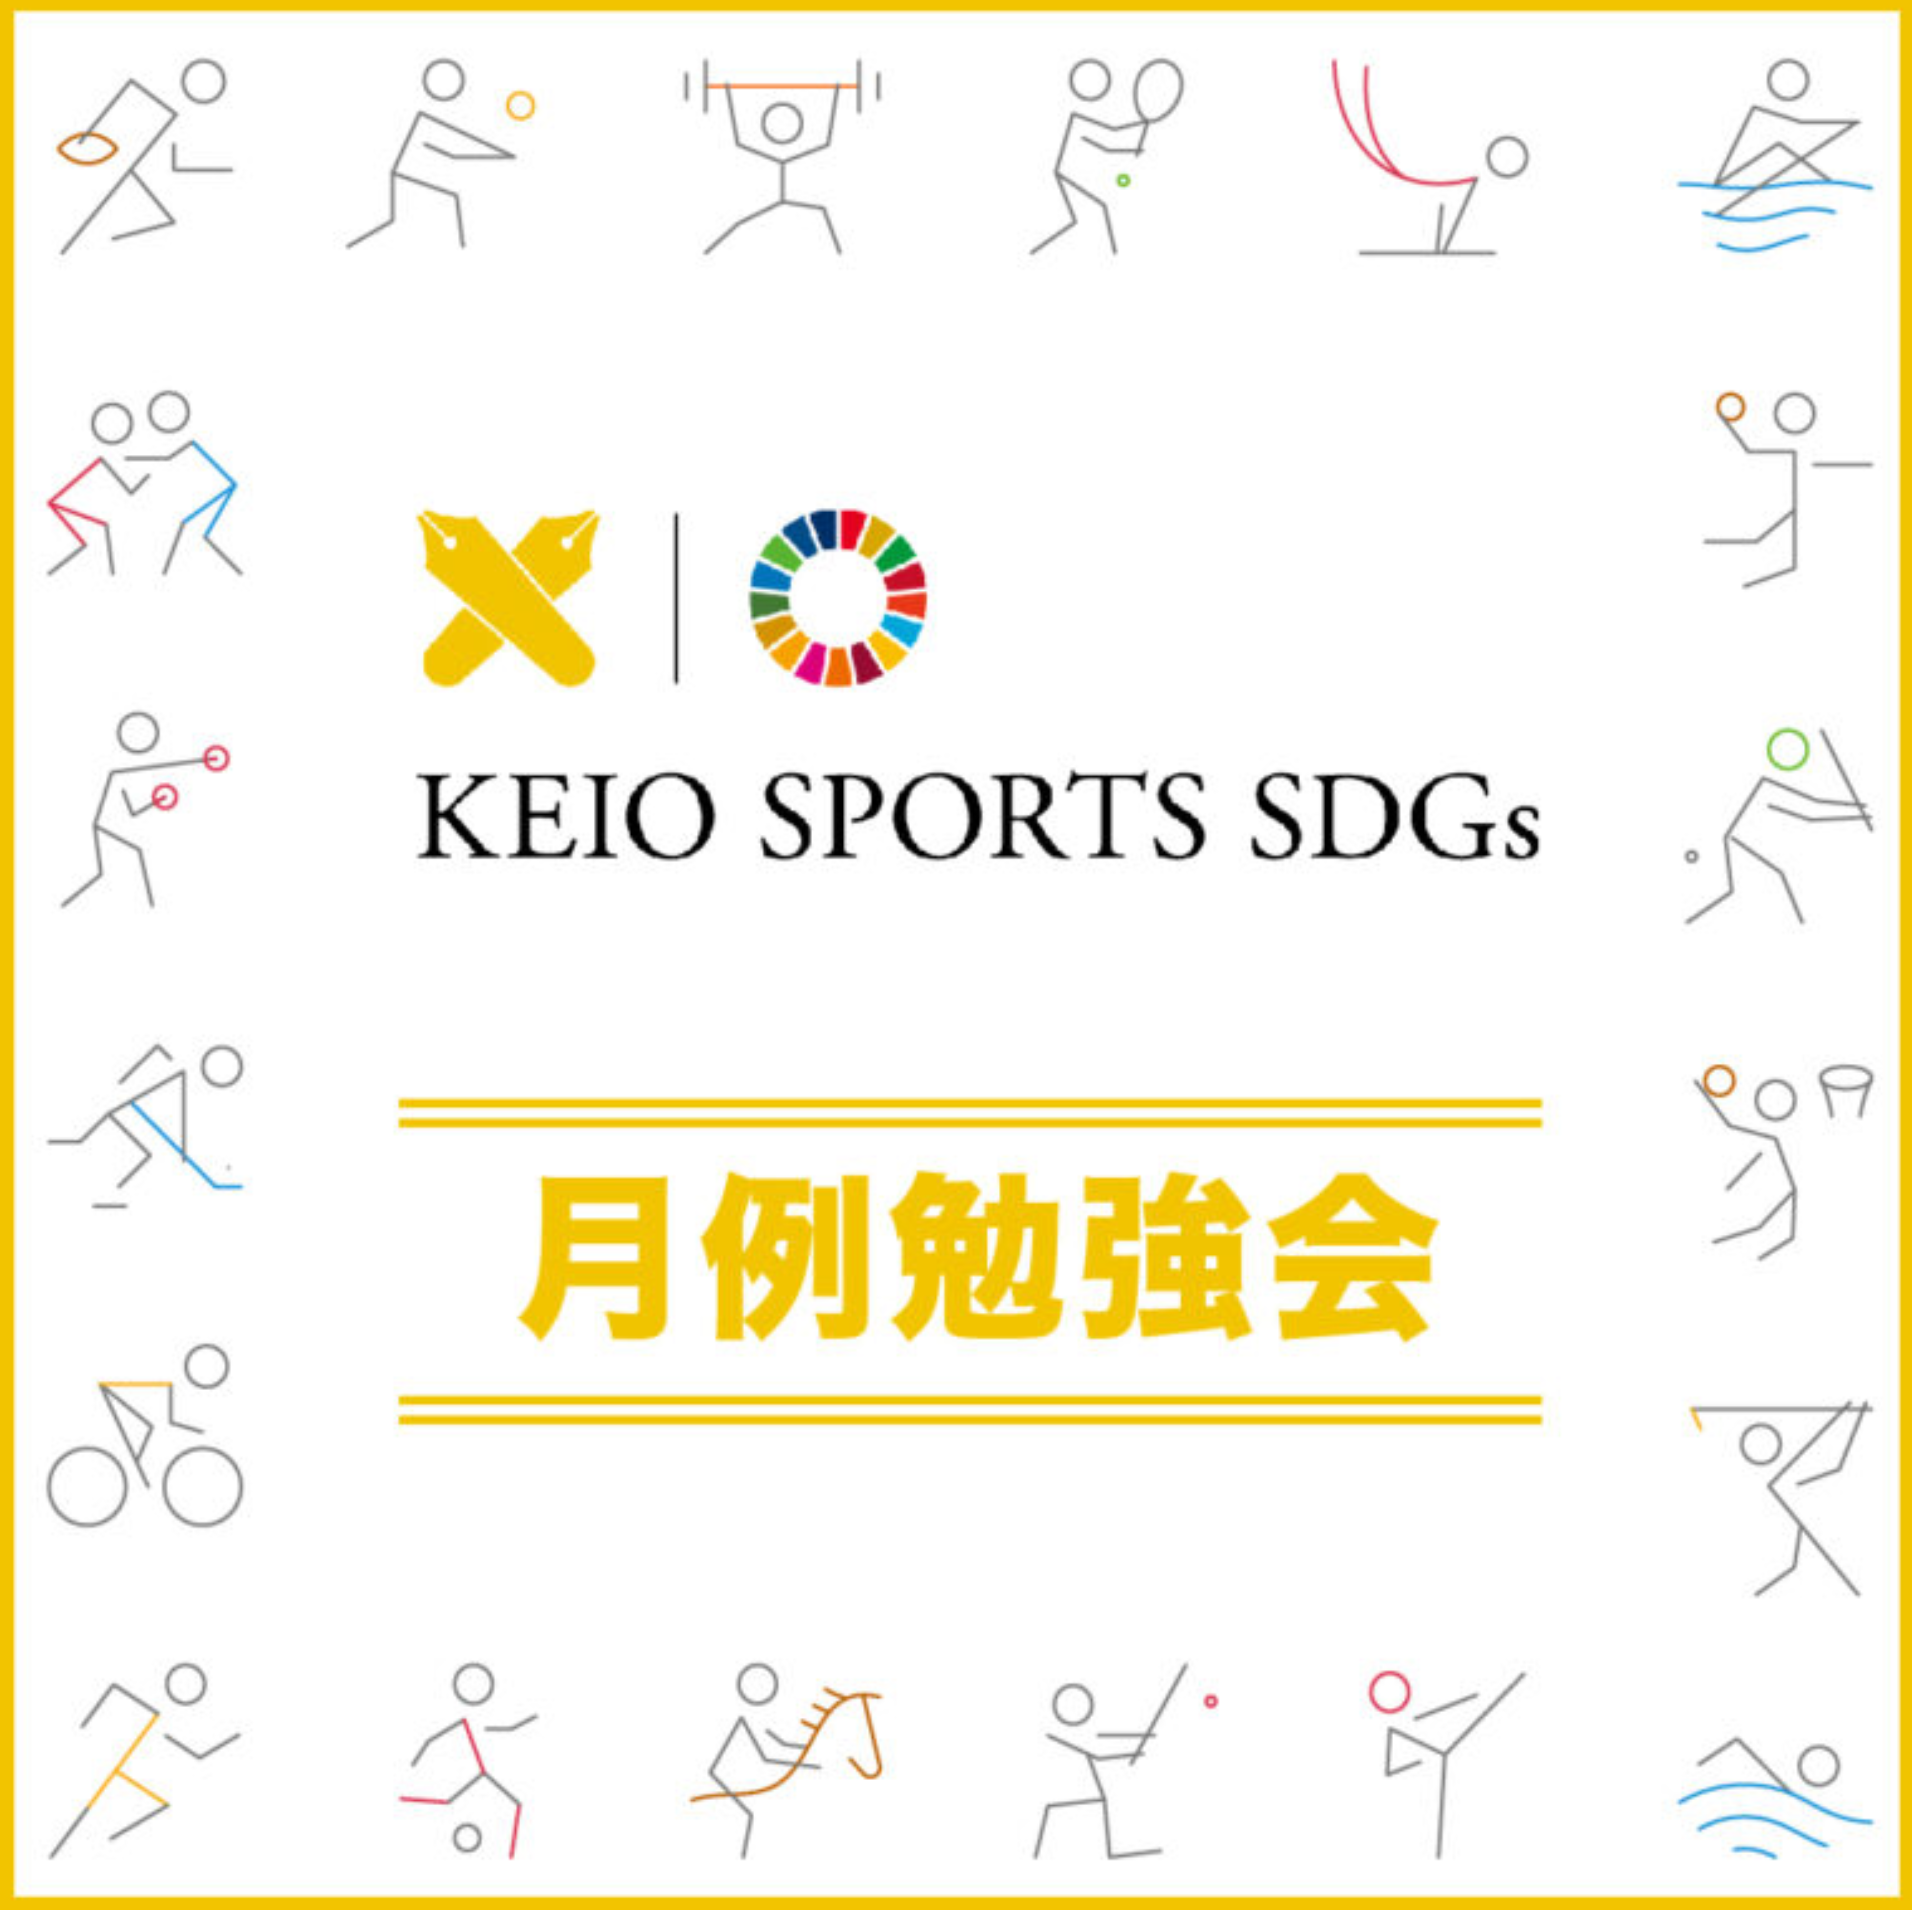 「KEIO Sports SDGs」定例勉強会でお話しします